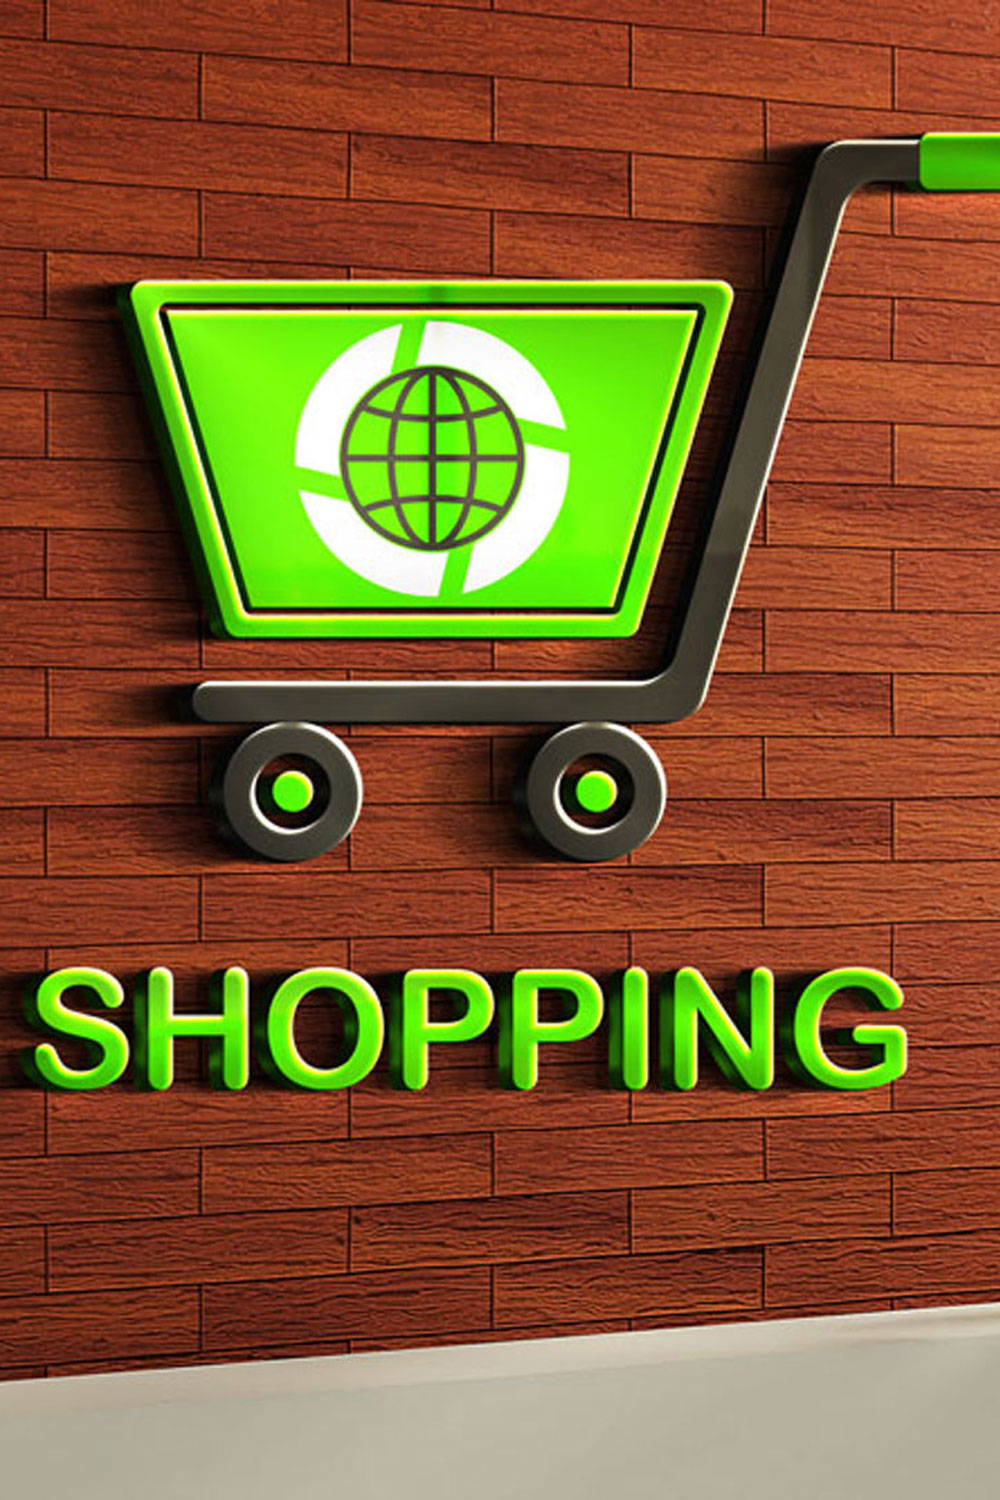 Shopping Cart Logo Design Pinterest image.